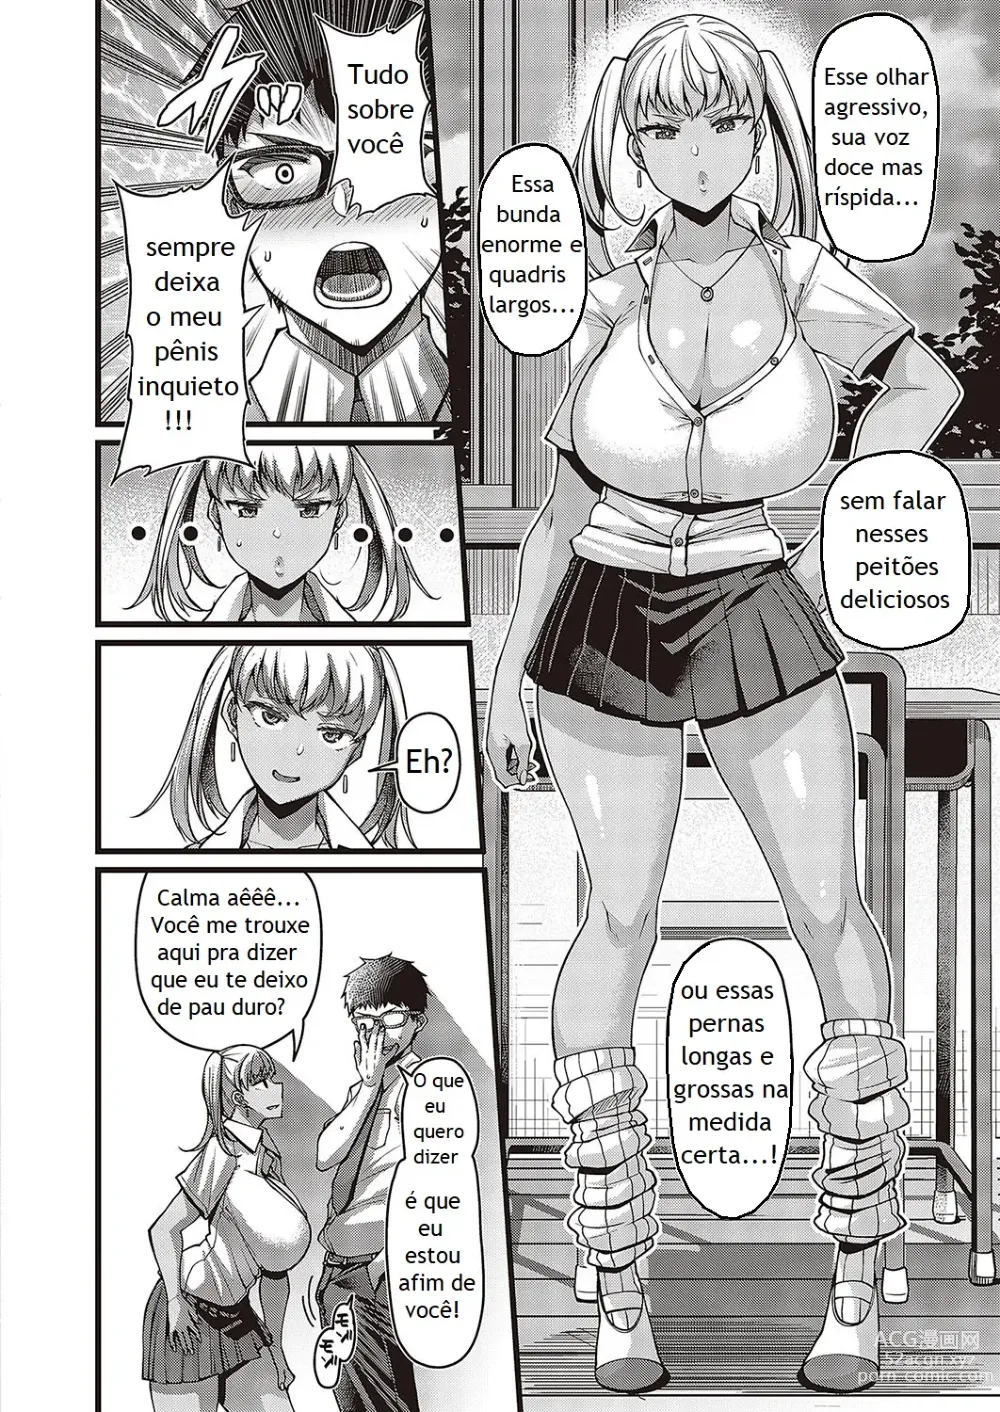 Page 4 of manga Way to Go!